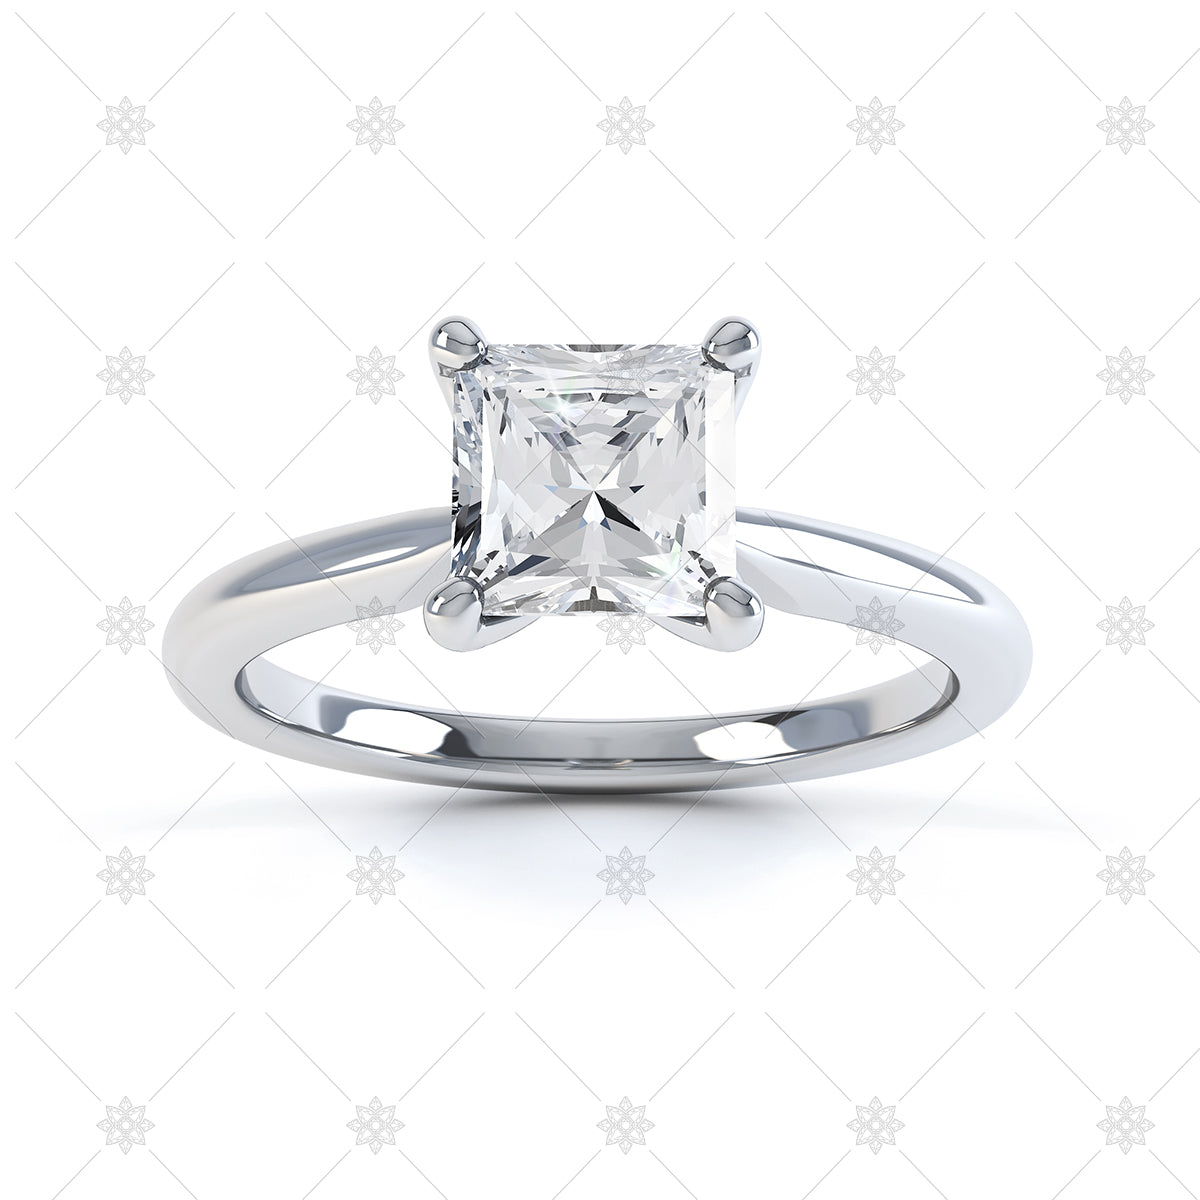 Square Diamond Ring Image Pack - 3002